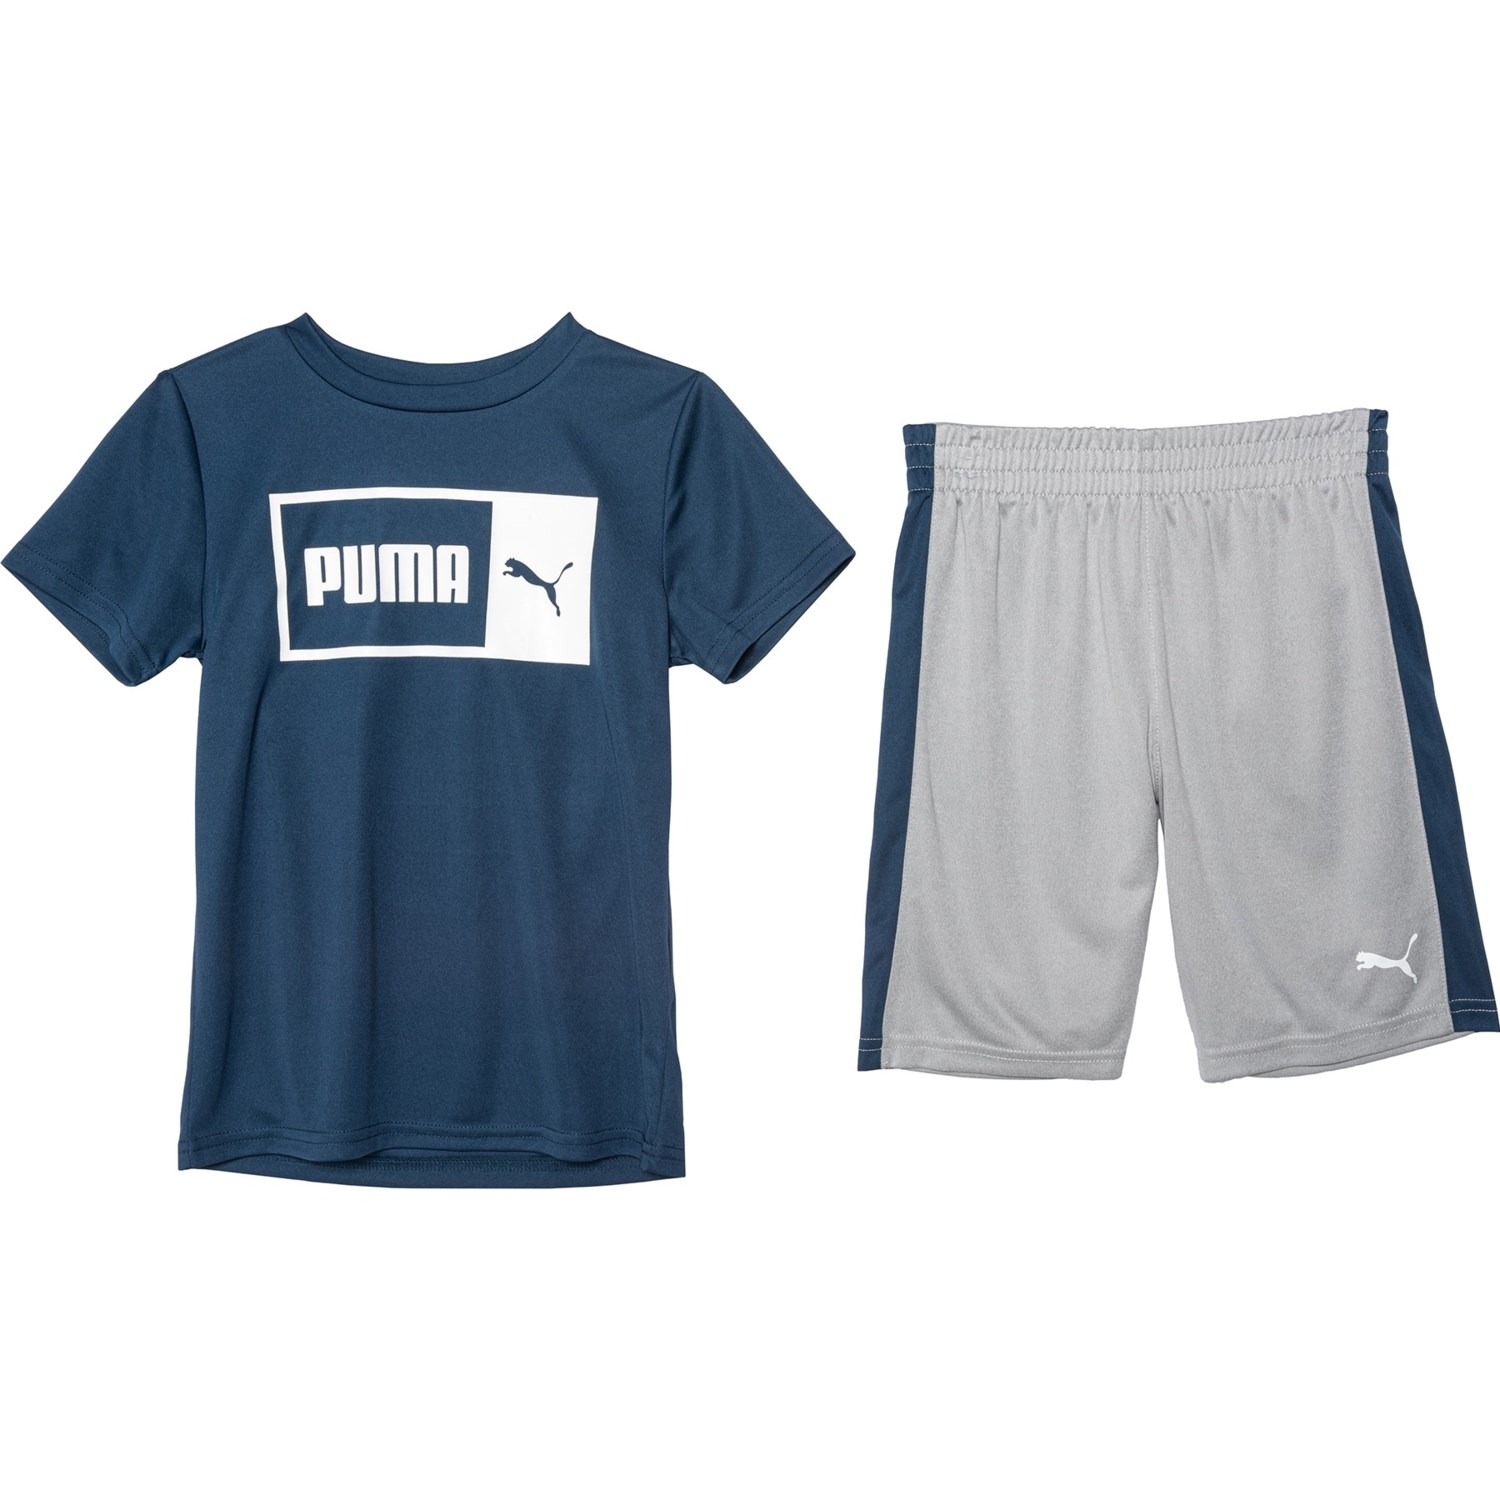 Puma High-Performance T-Shirt and 